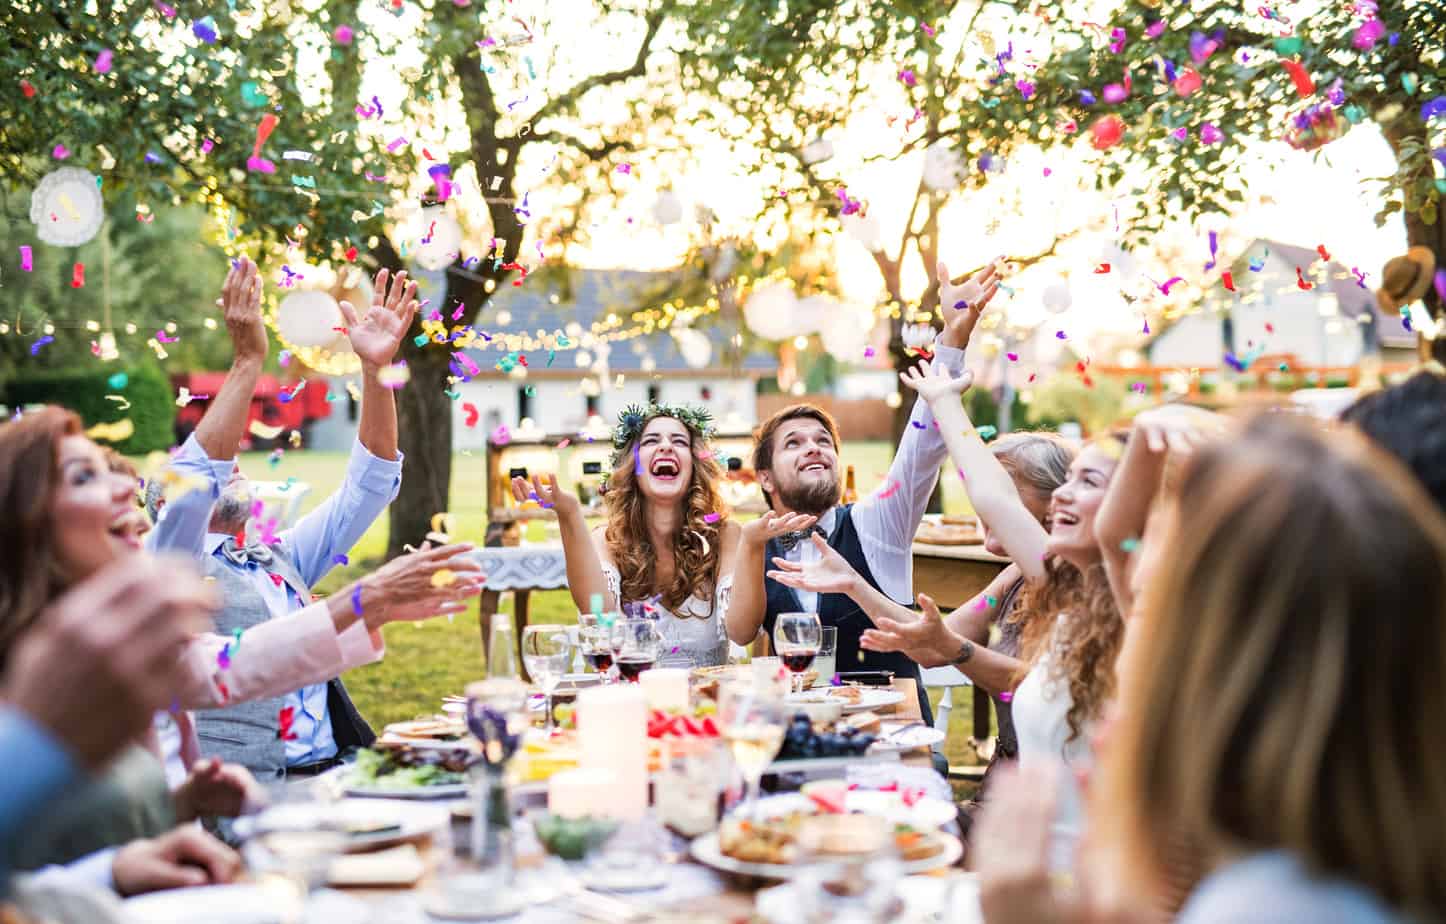 8 Party Tips for Summertime Entertaining